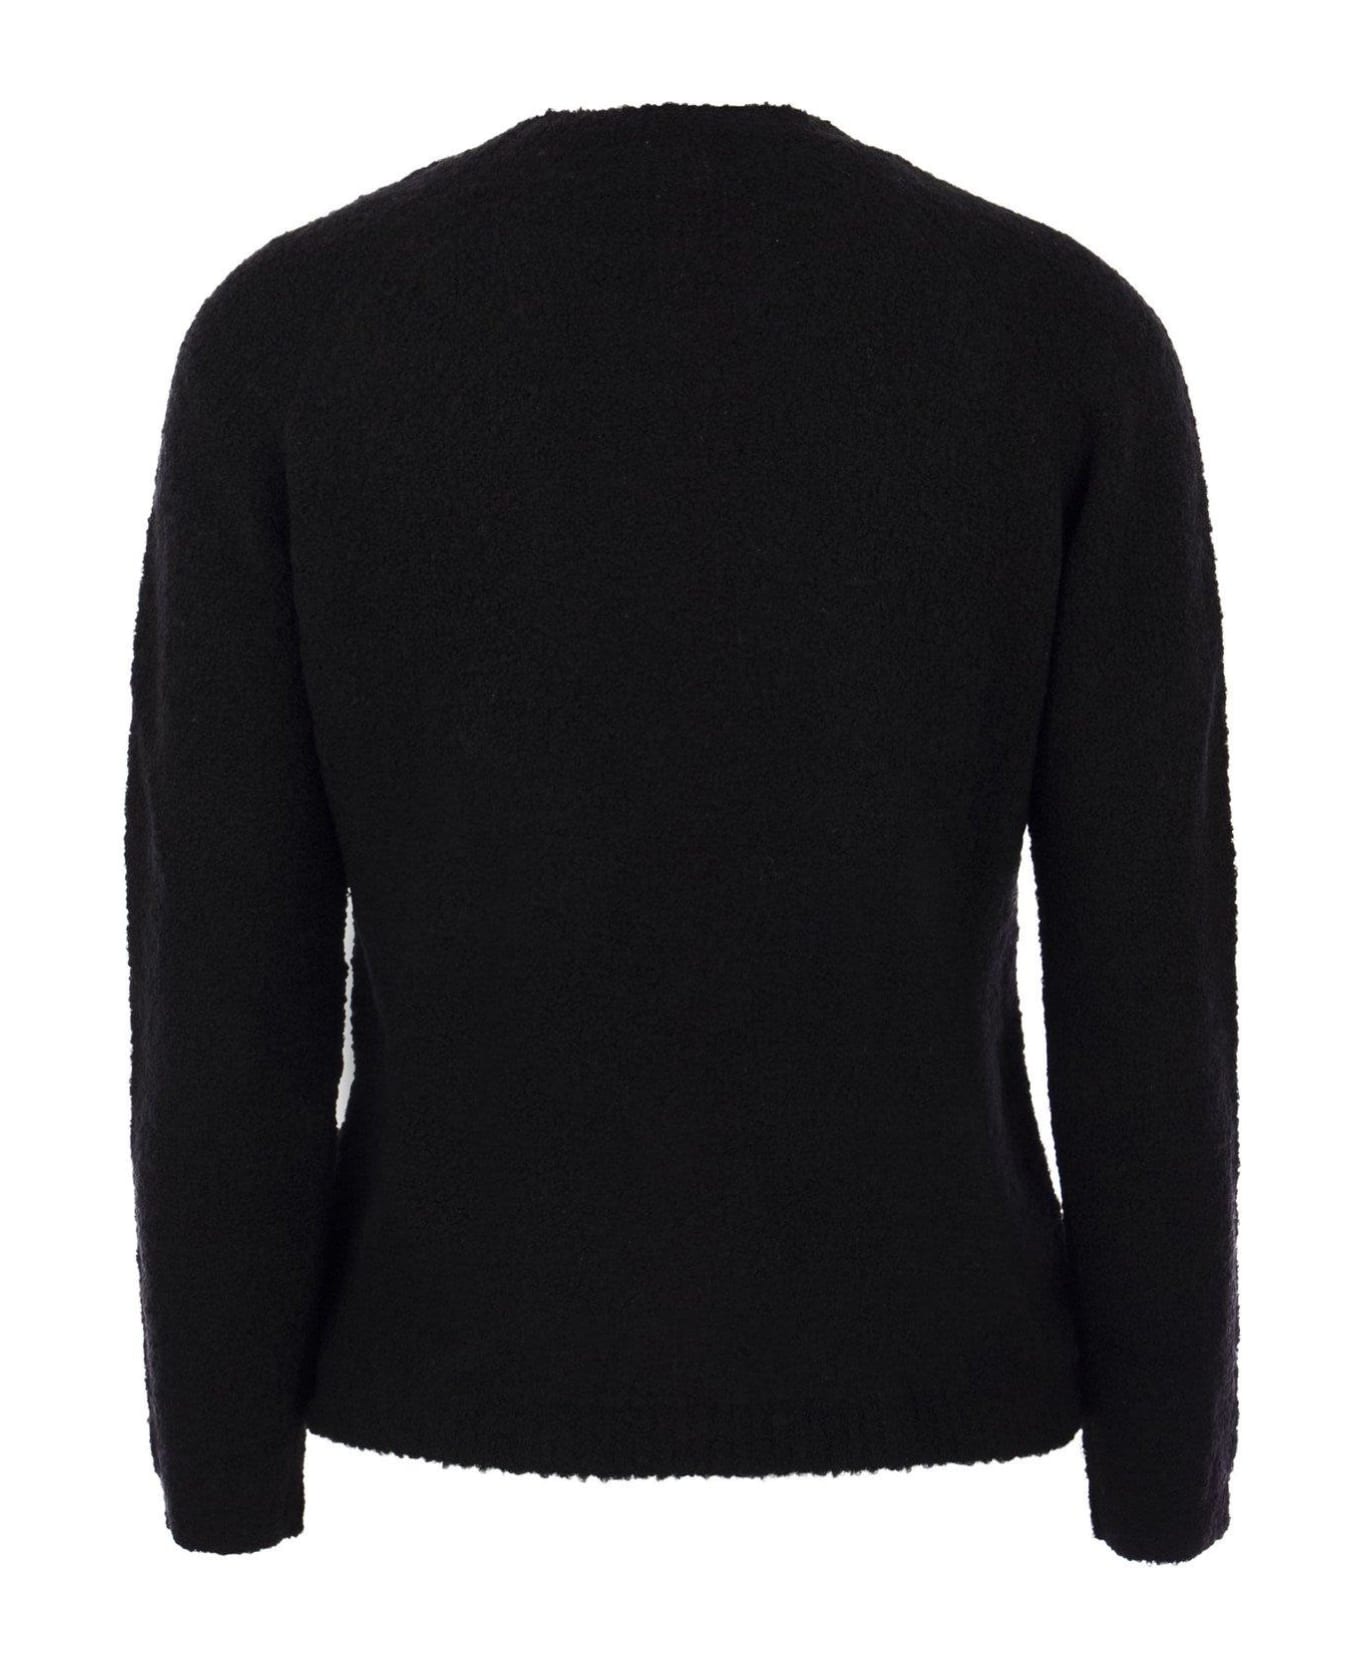 Max Mara Studio Fify Sweater - Black